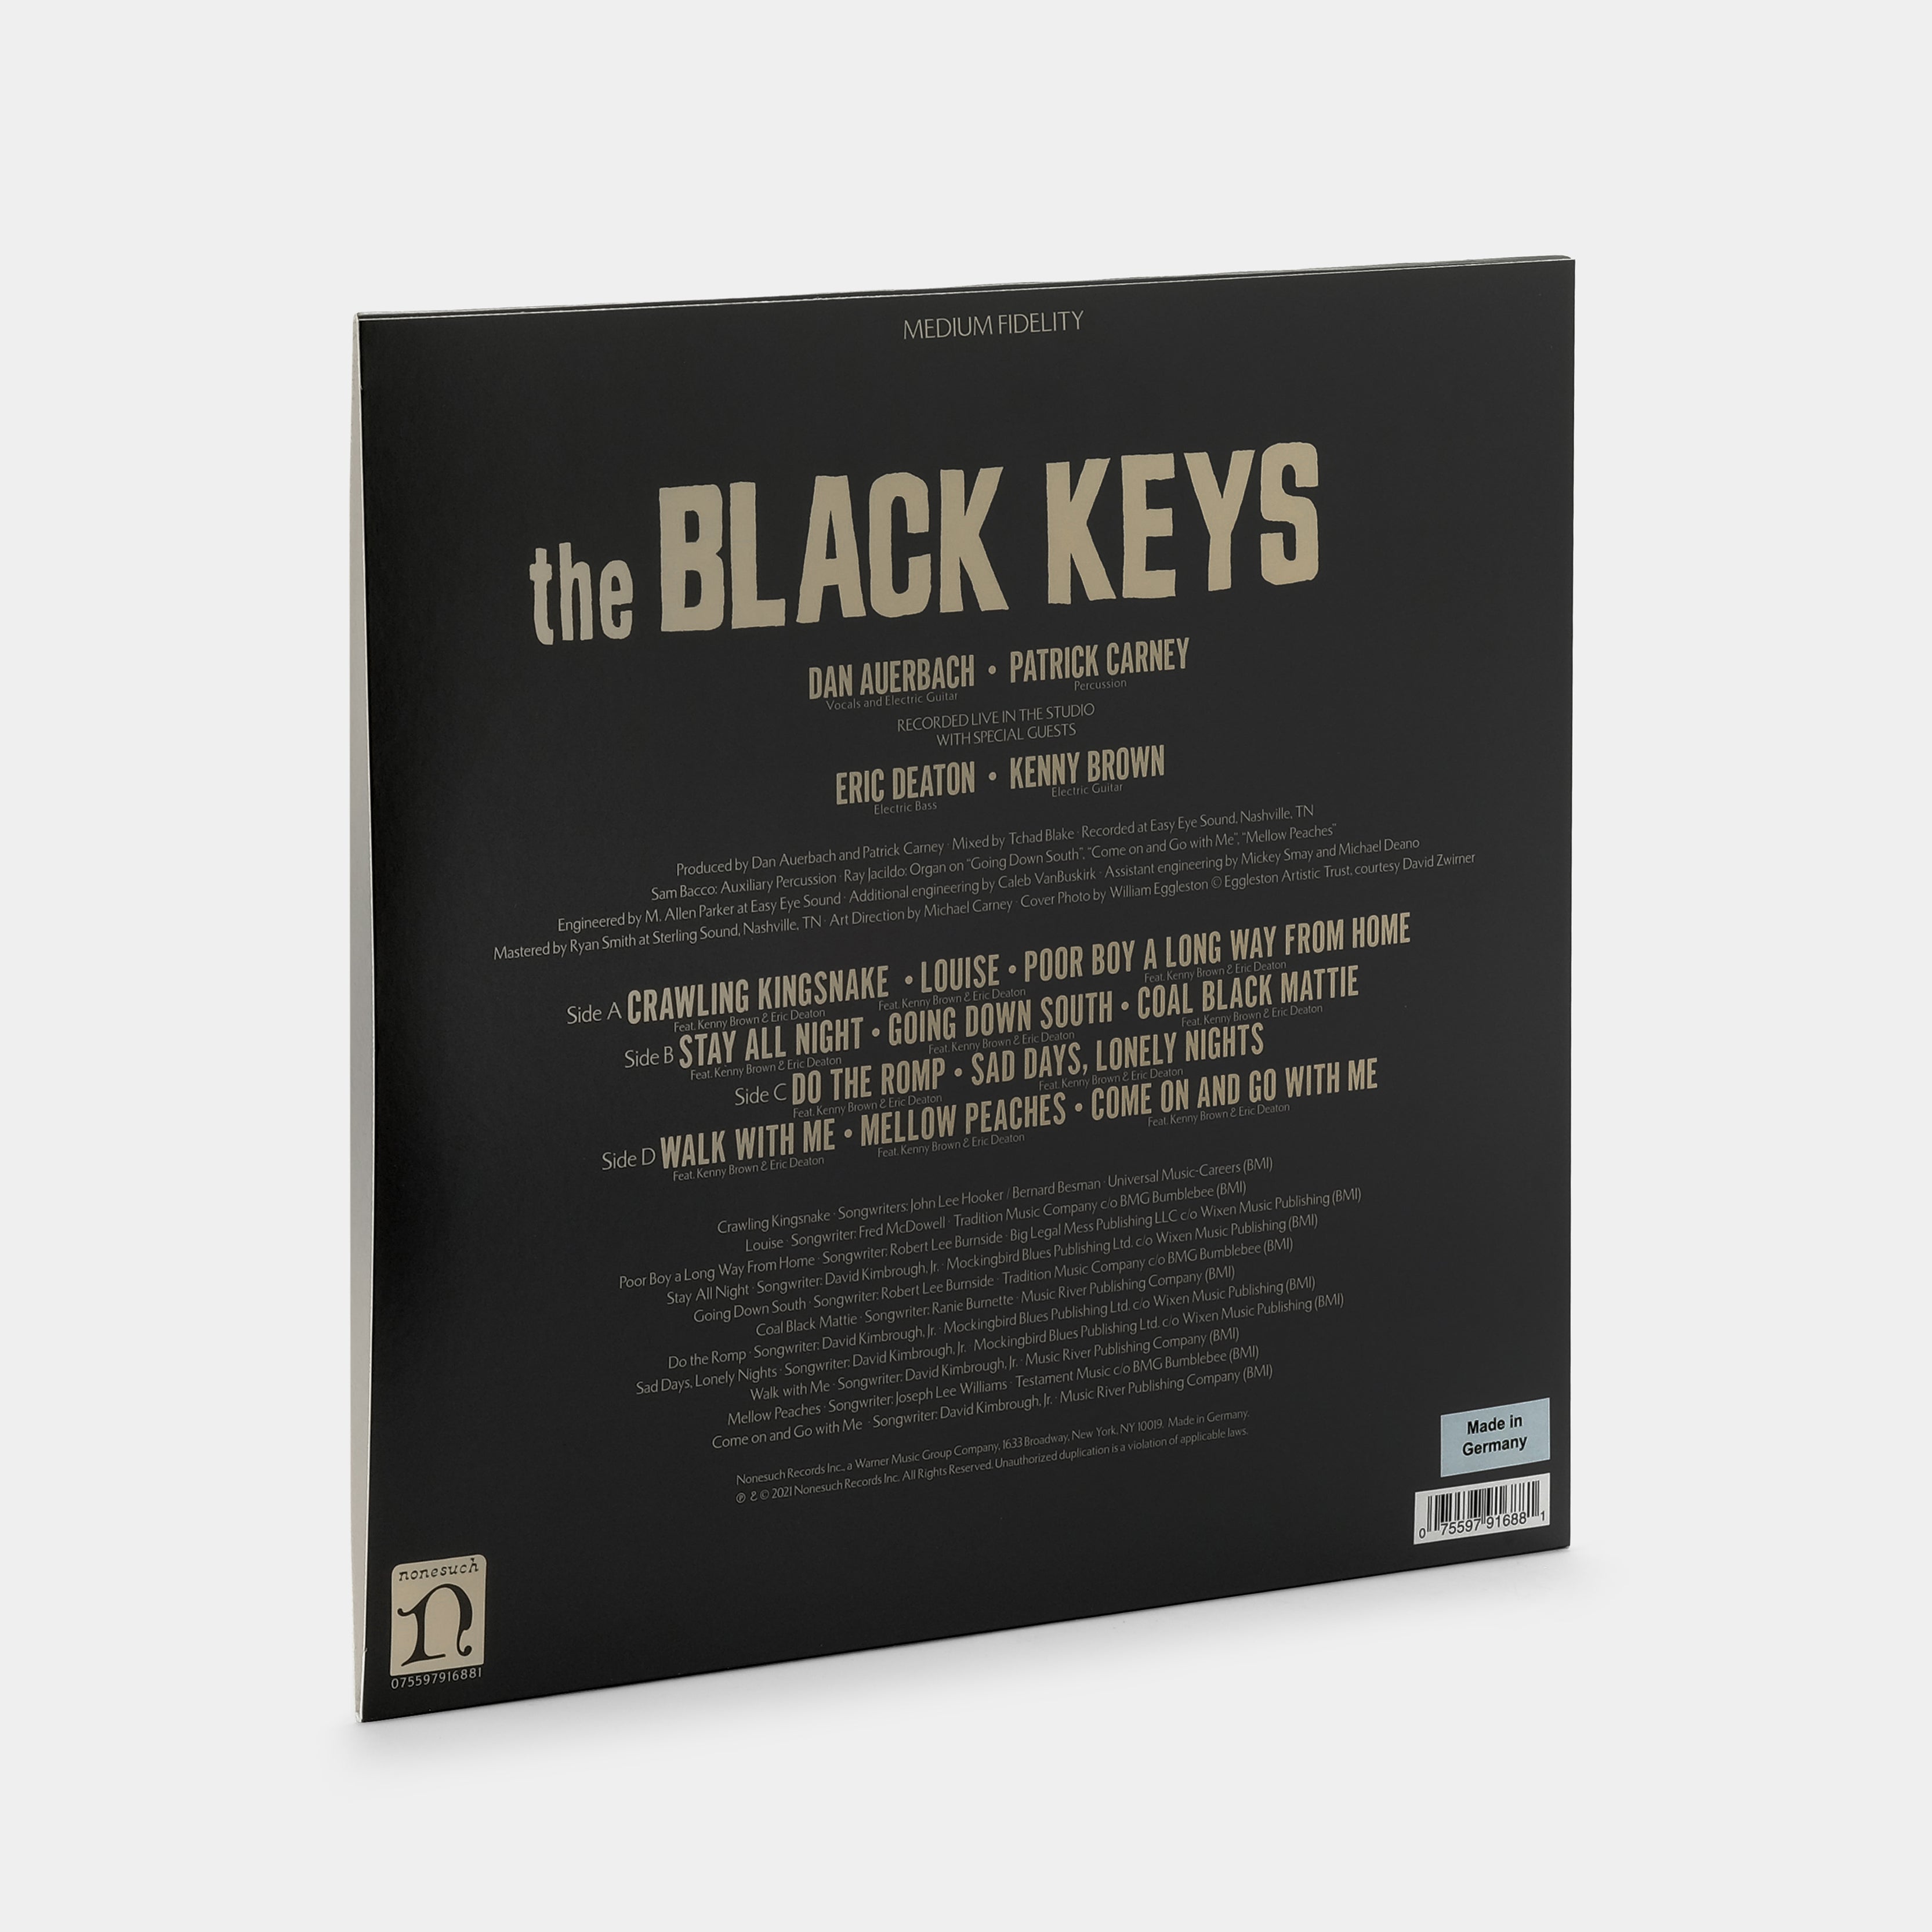 The Black Keys - Delta Kream 2xLP Vinyl Record